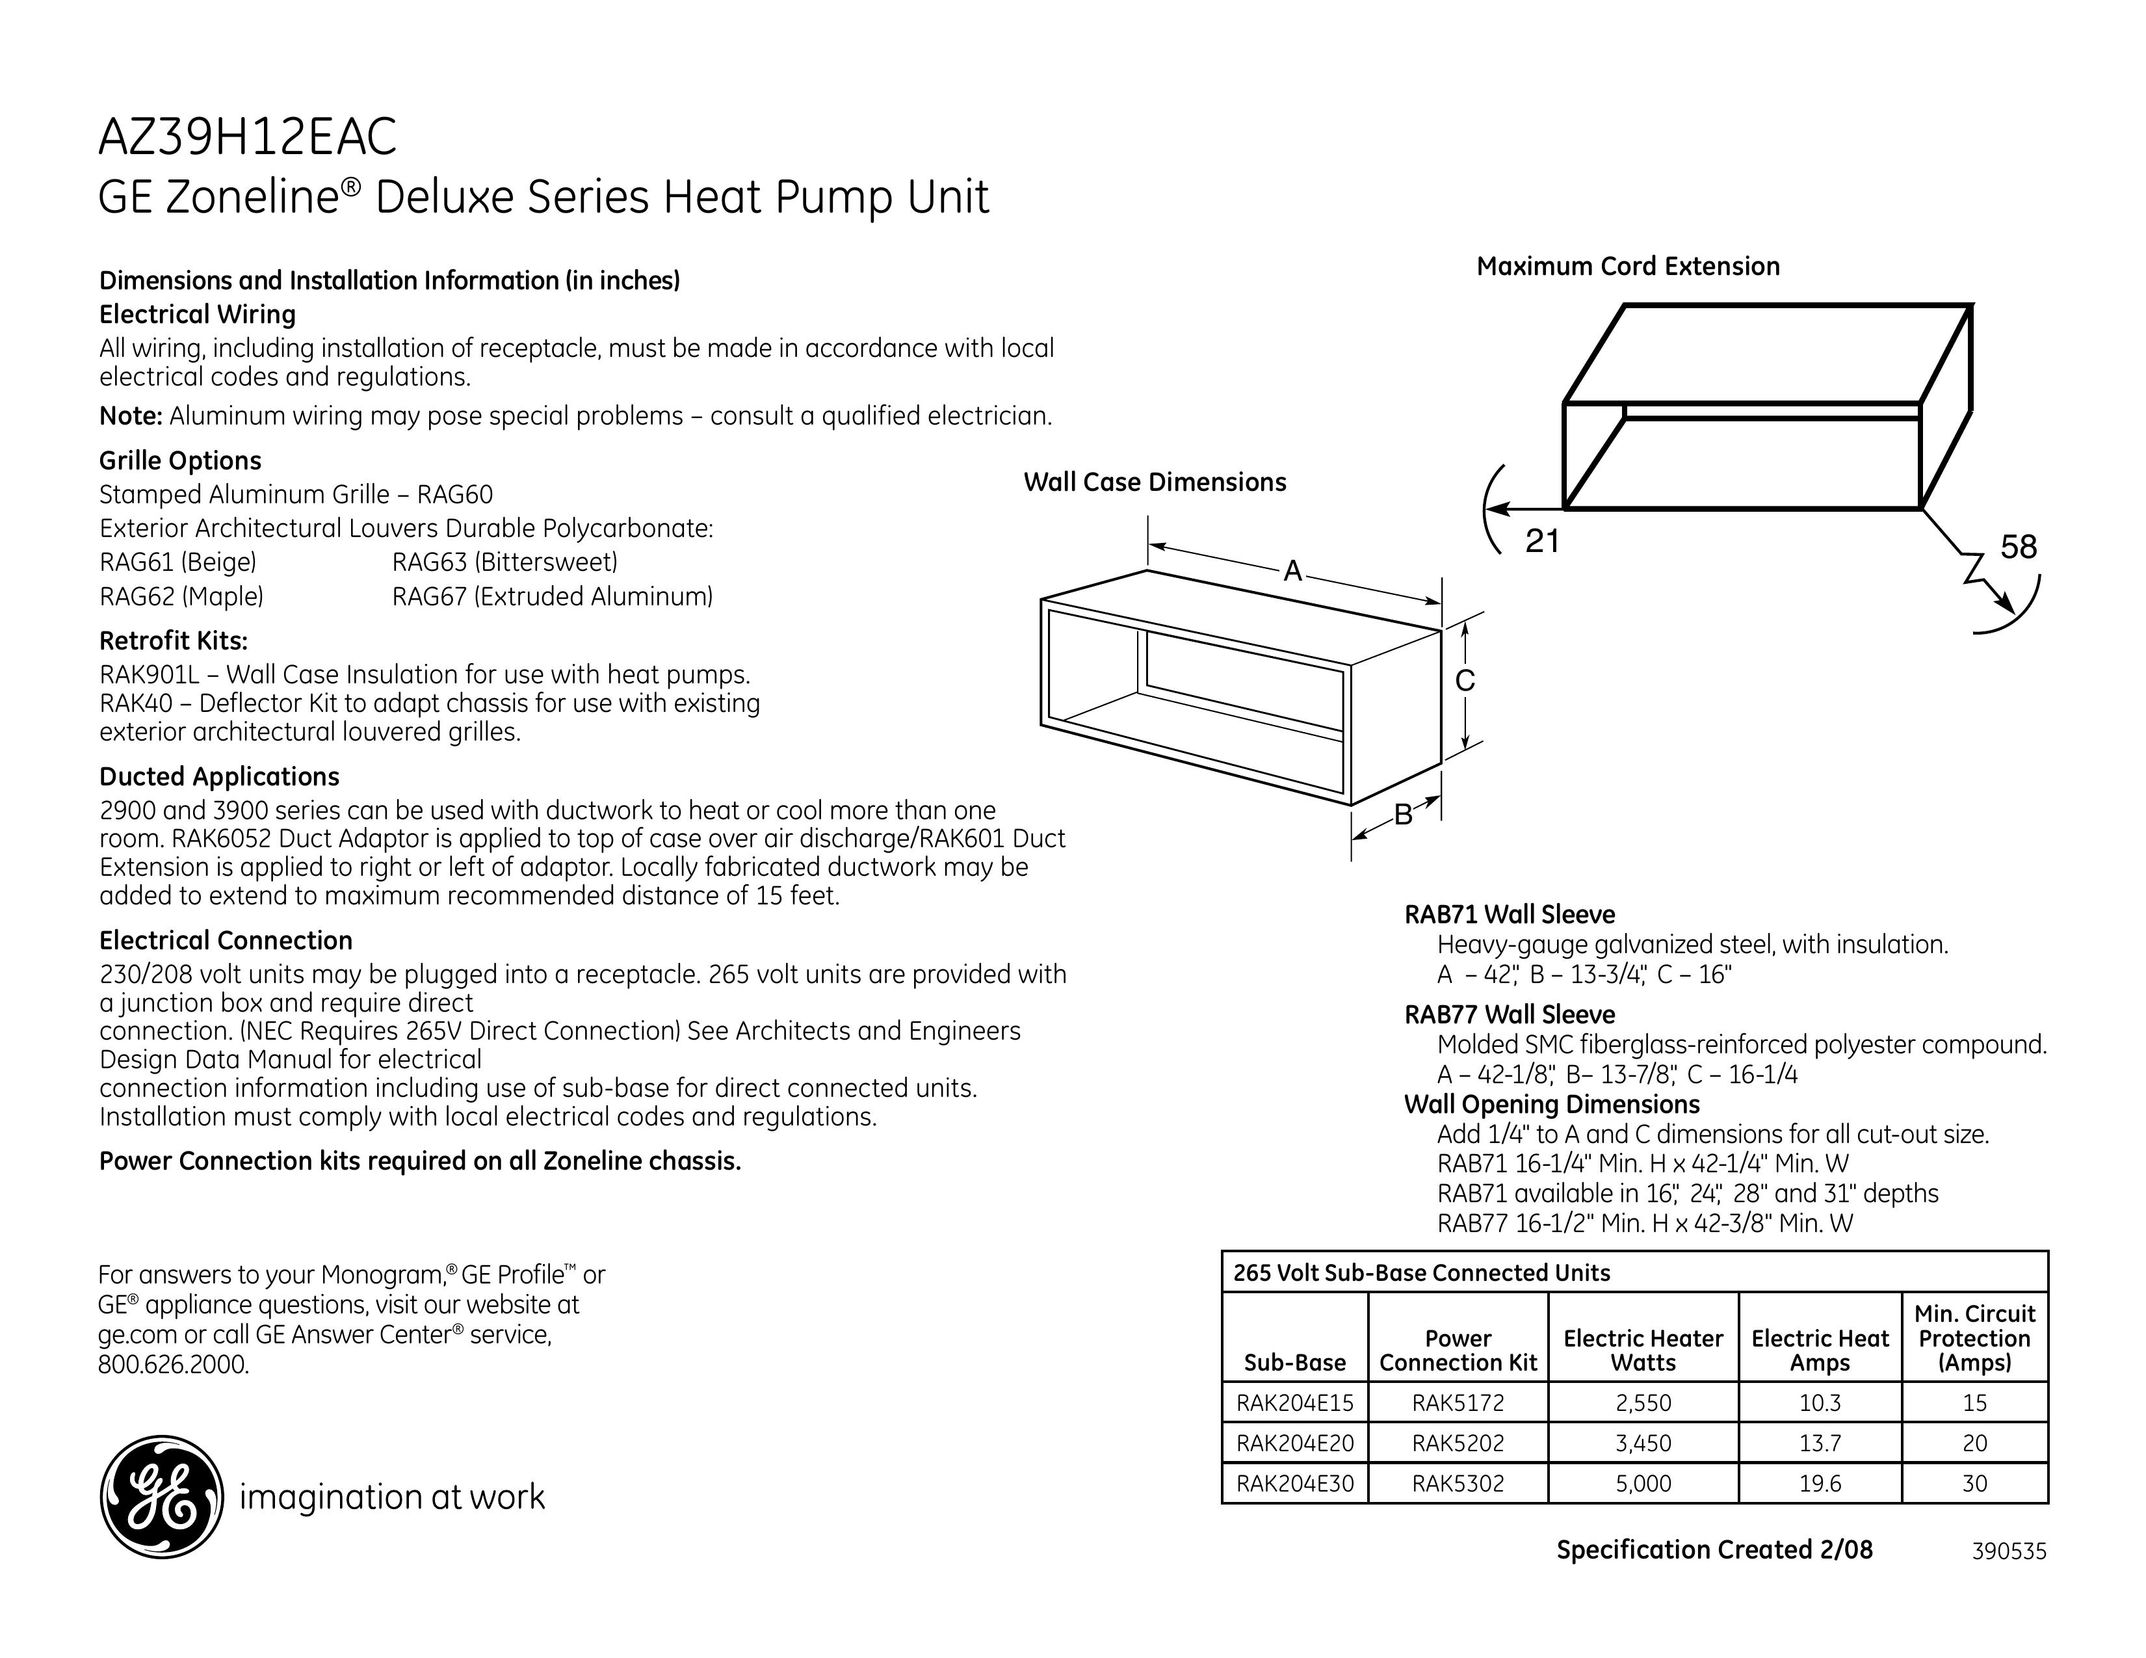 GE AZ39H12EAC Heat Pump User Manual